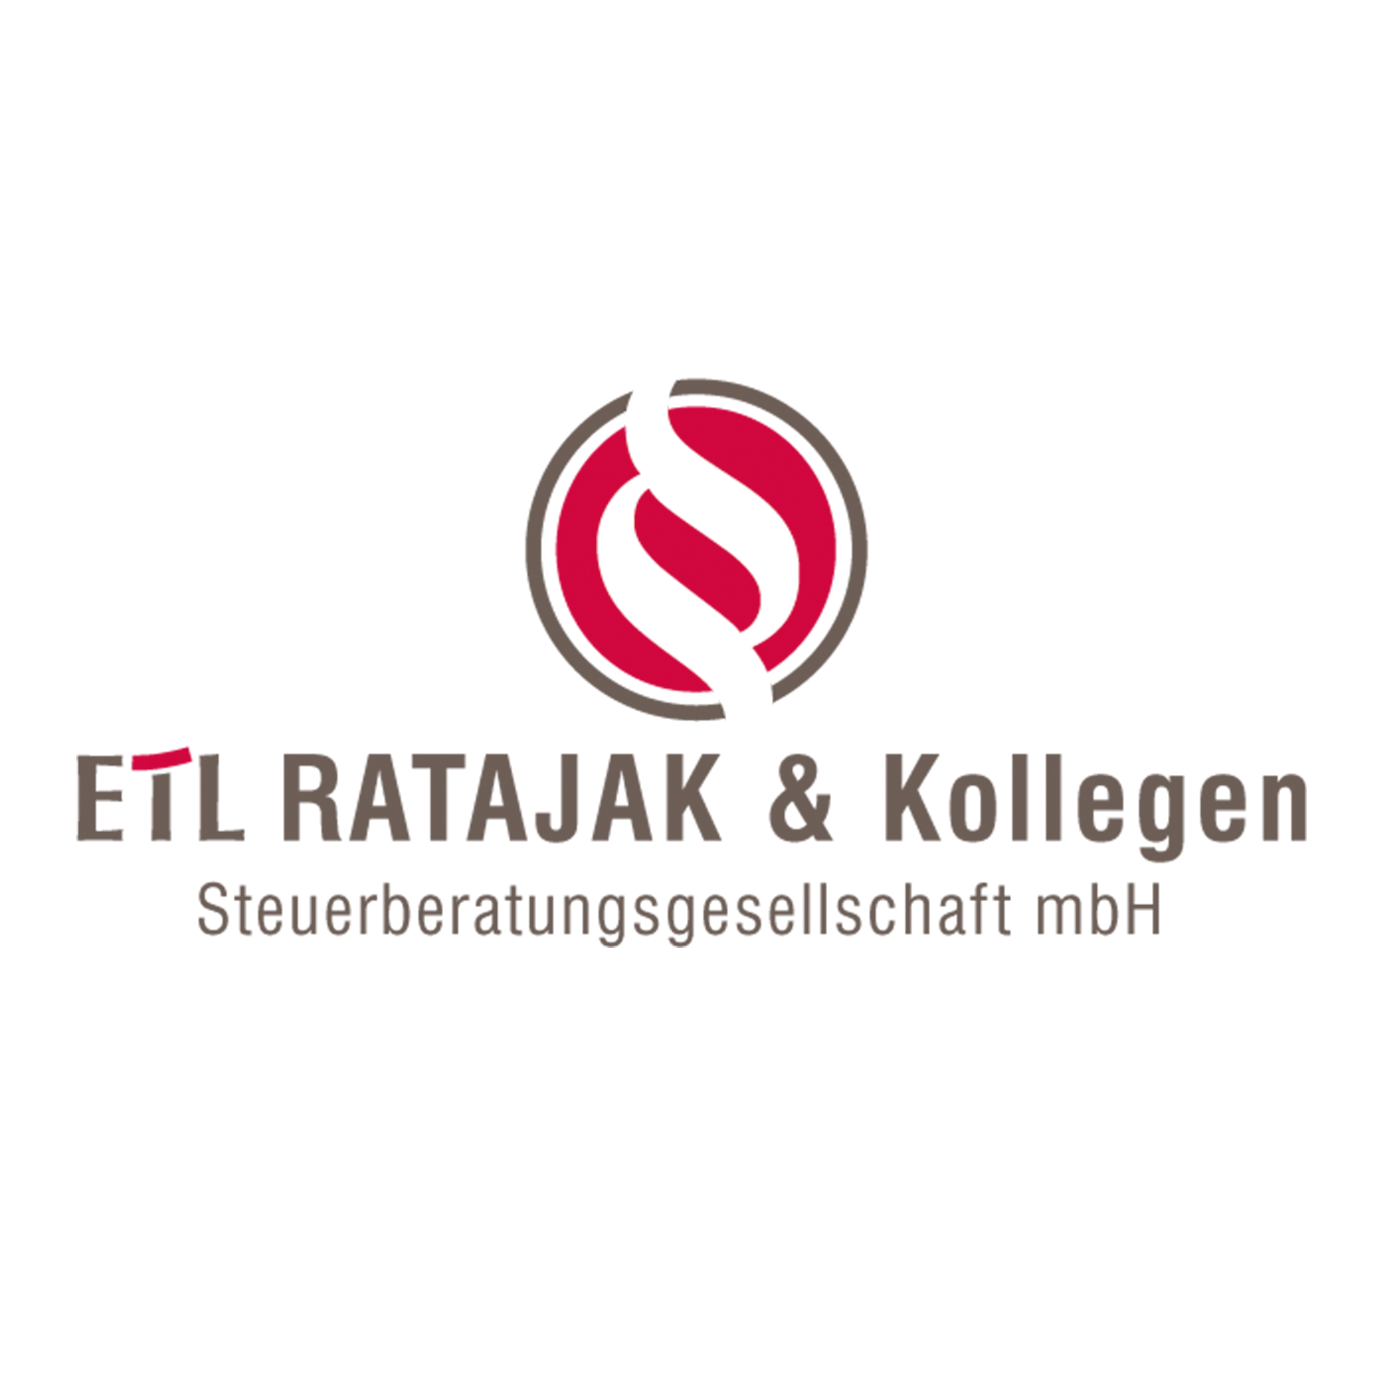 ETL RATAJAK & Kollegen Steuerberatungsgesellschaft mbH Logo